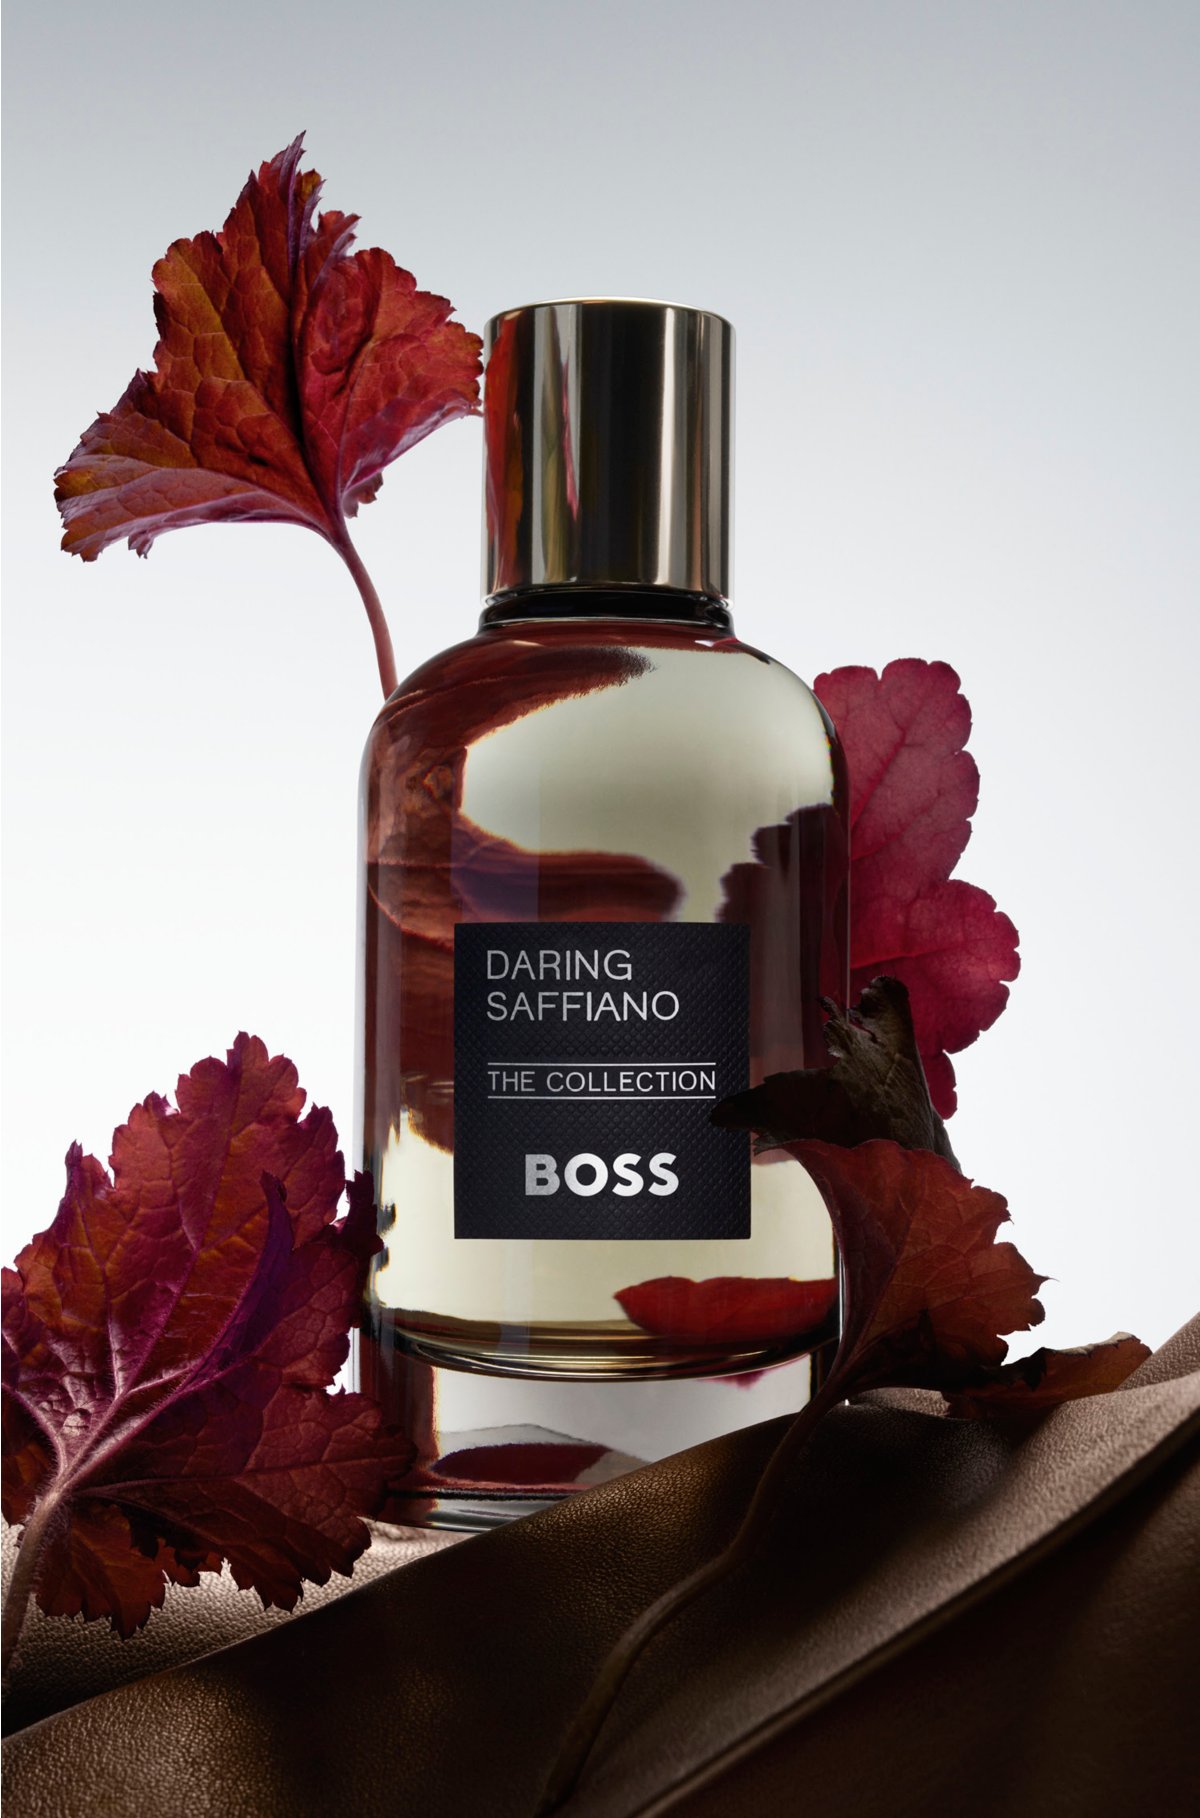 BOSS The Collection Daring Saffiano eau de parfum 100ml, Assorted-Pre-Pack